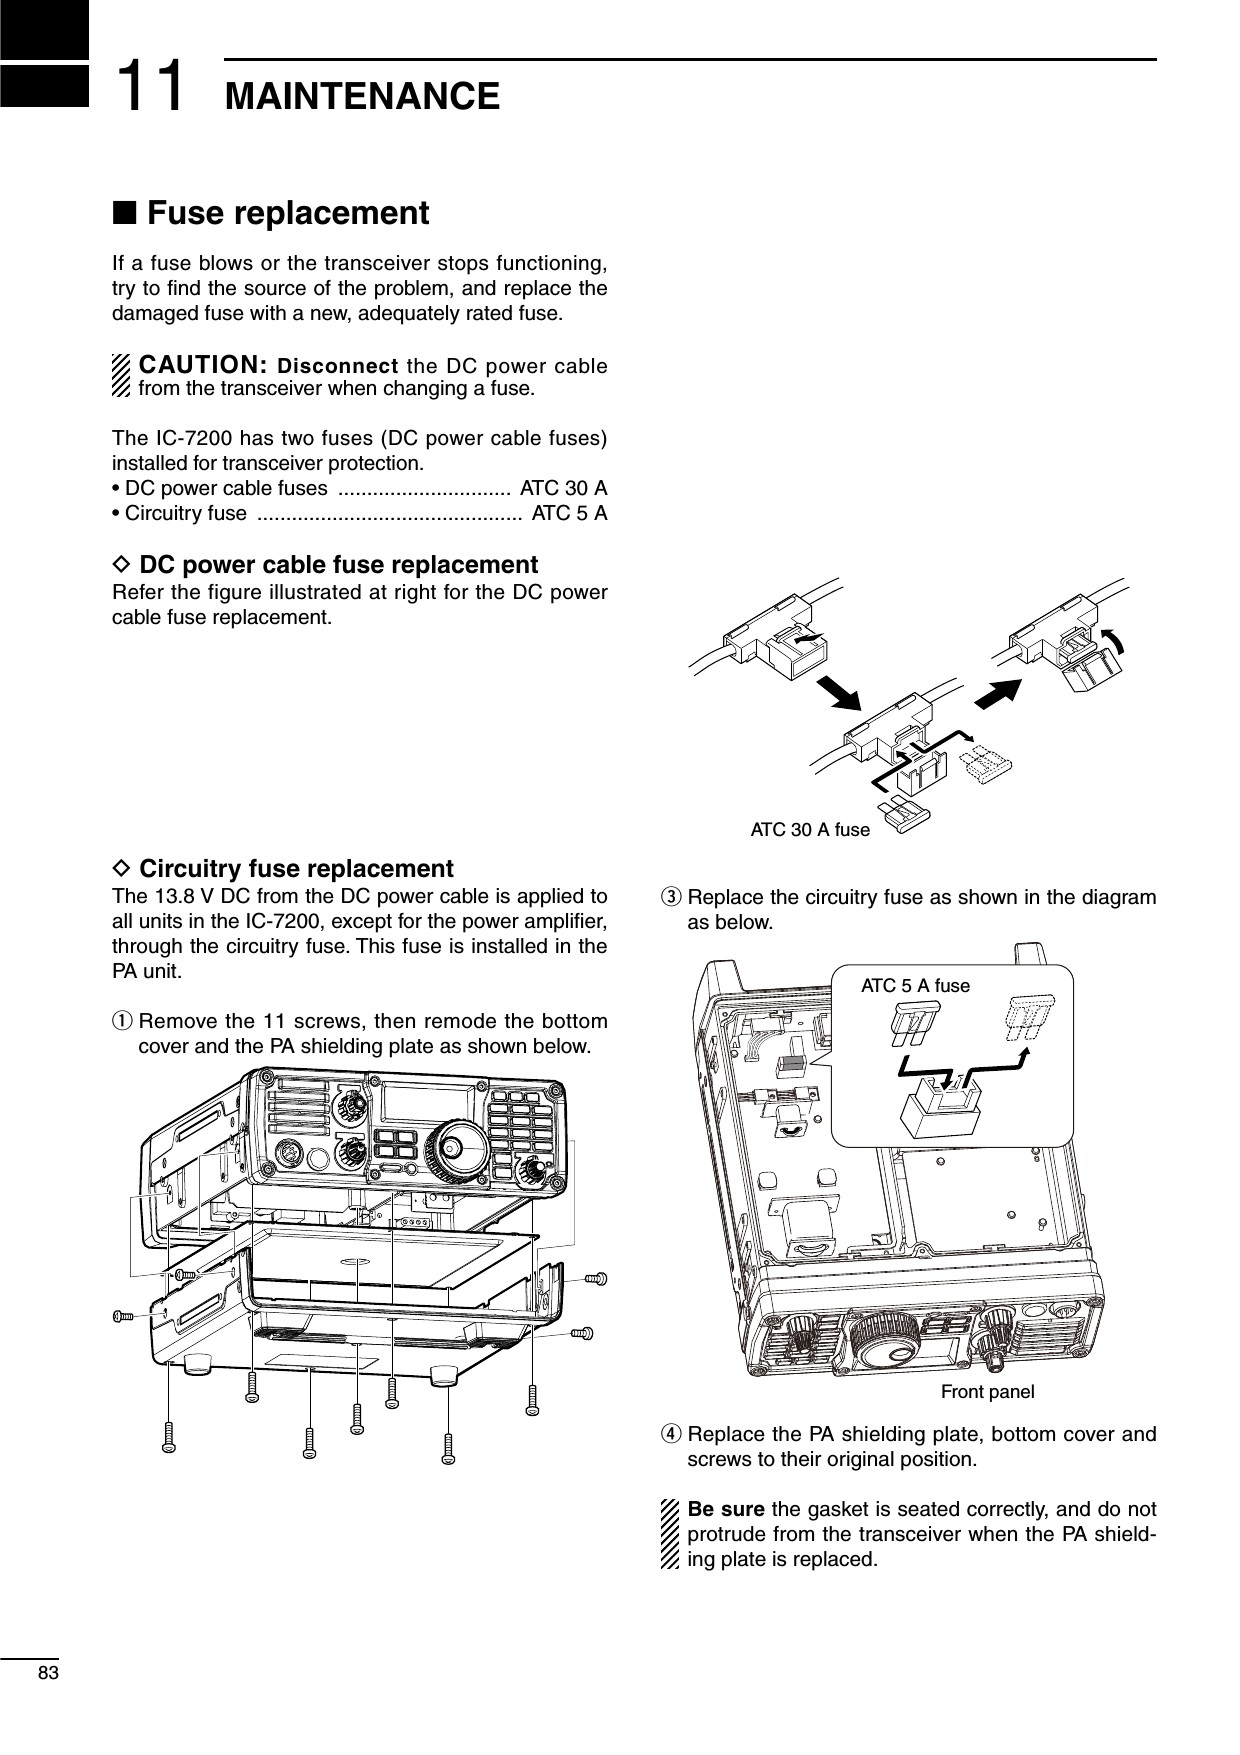 Manual Transmission Diagram Hf 50 Mhz Transceiver User Manual Ic 718 Instruction Manual Of Manual Transmission Diagram